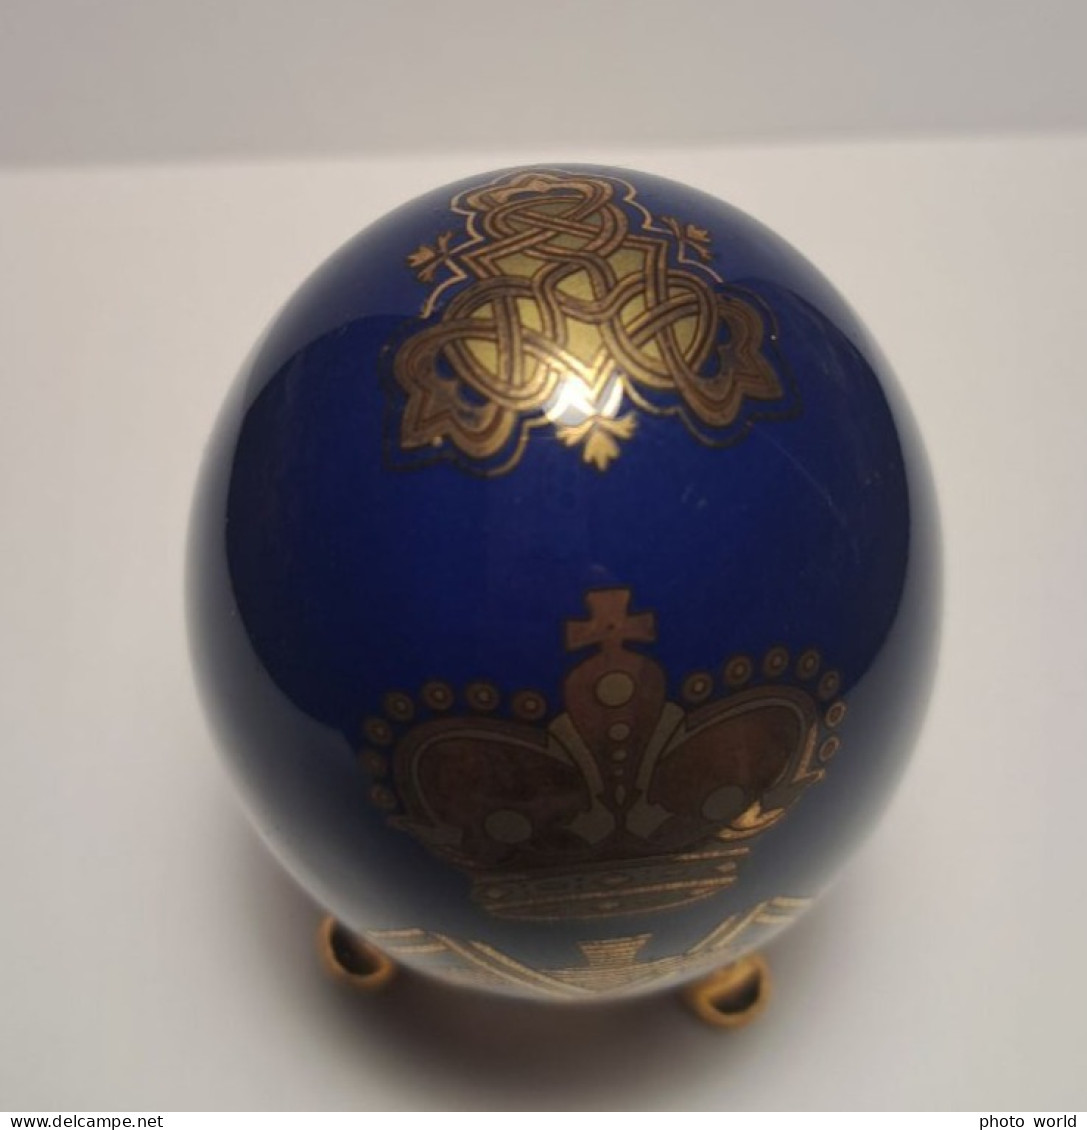 Imperial Russia porcelain Easter egg Empress Maria Feodorovna